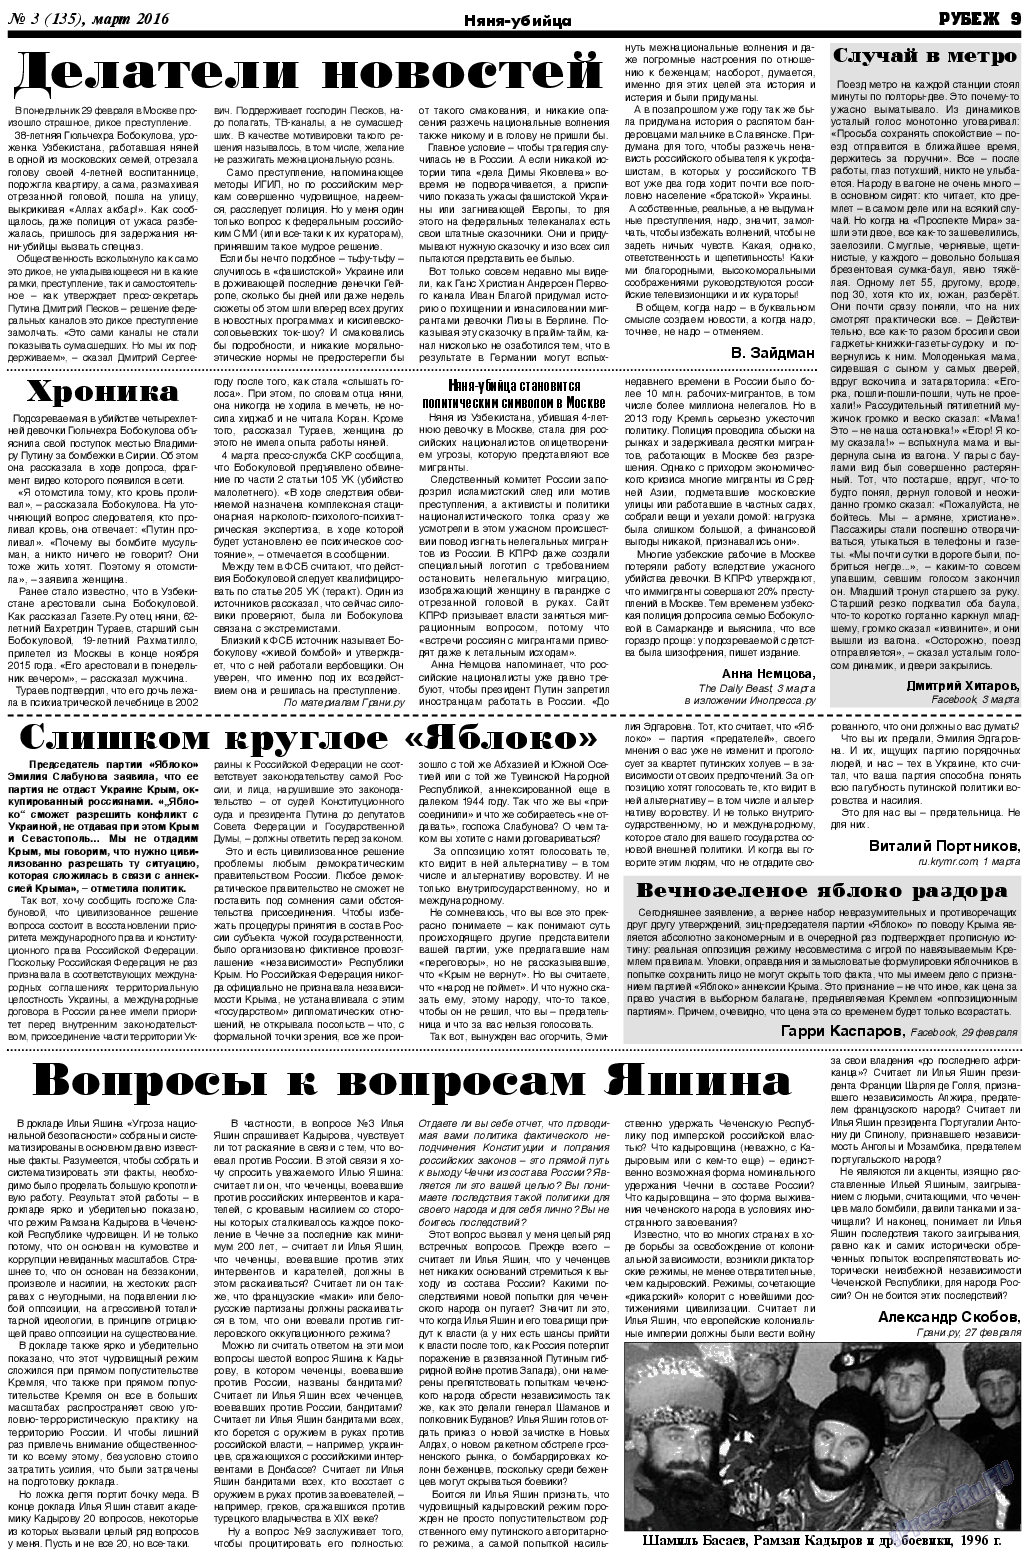 Рубеж, газета. 2016 №3 стр.9